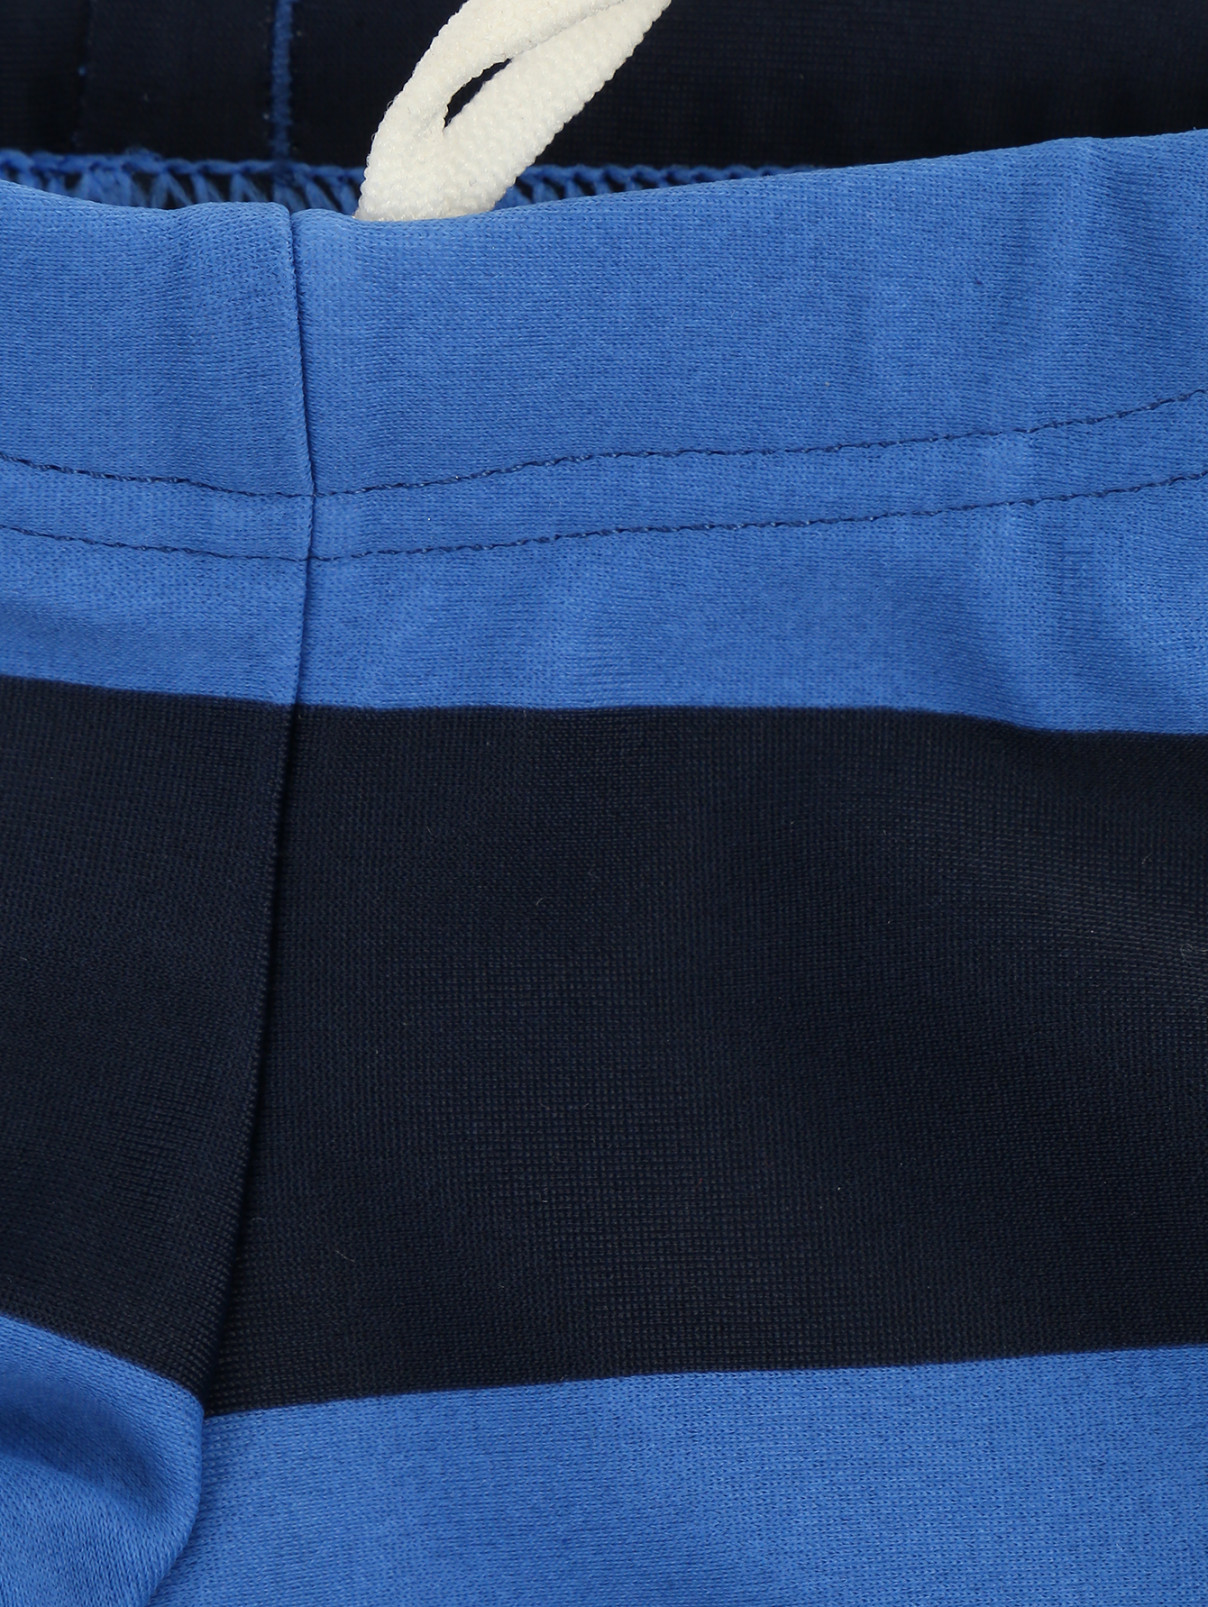 Плавки на завязках с узором "полоска" Sanetta  –  Деталь1  – Цвет:  Узор